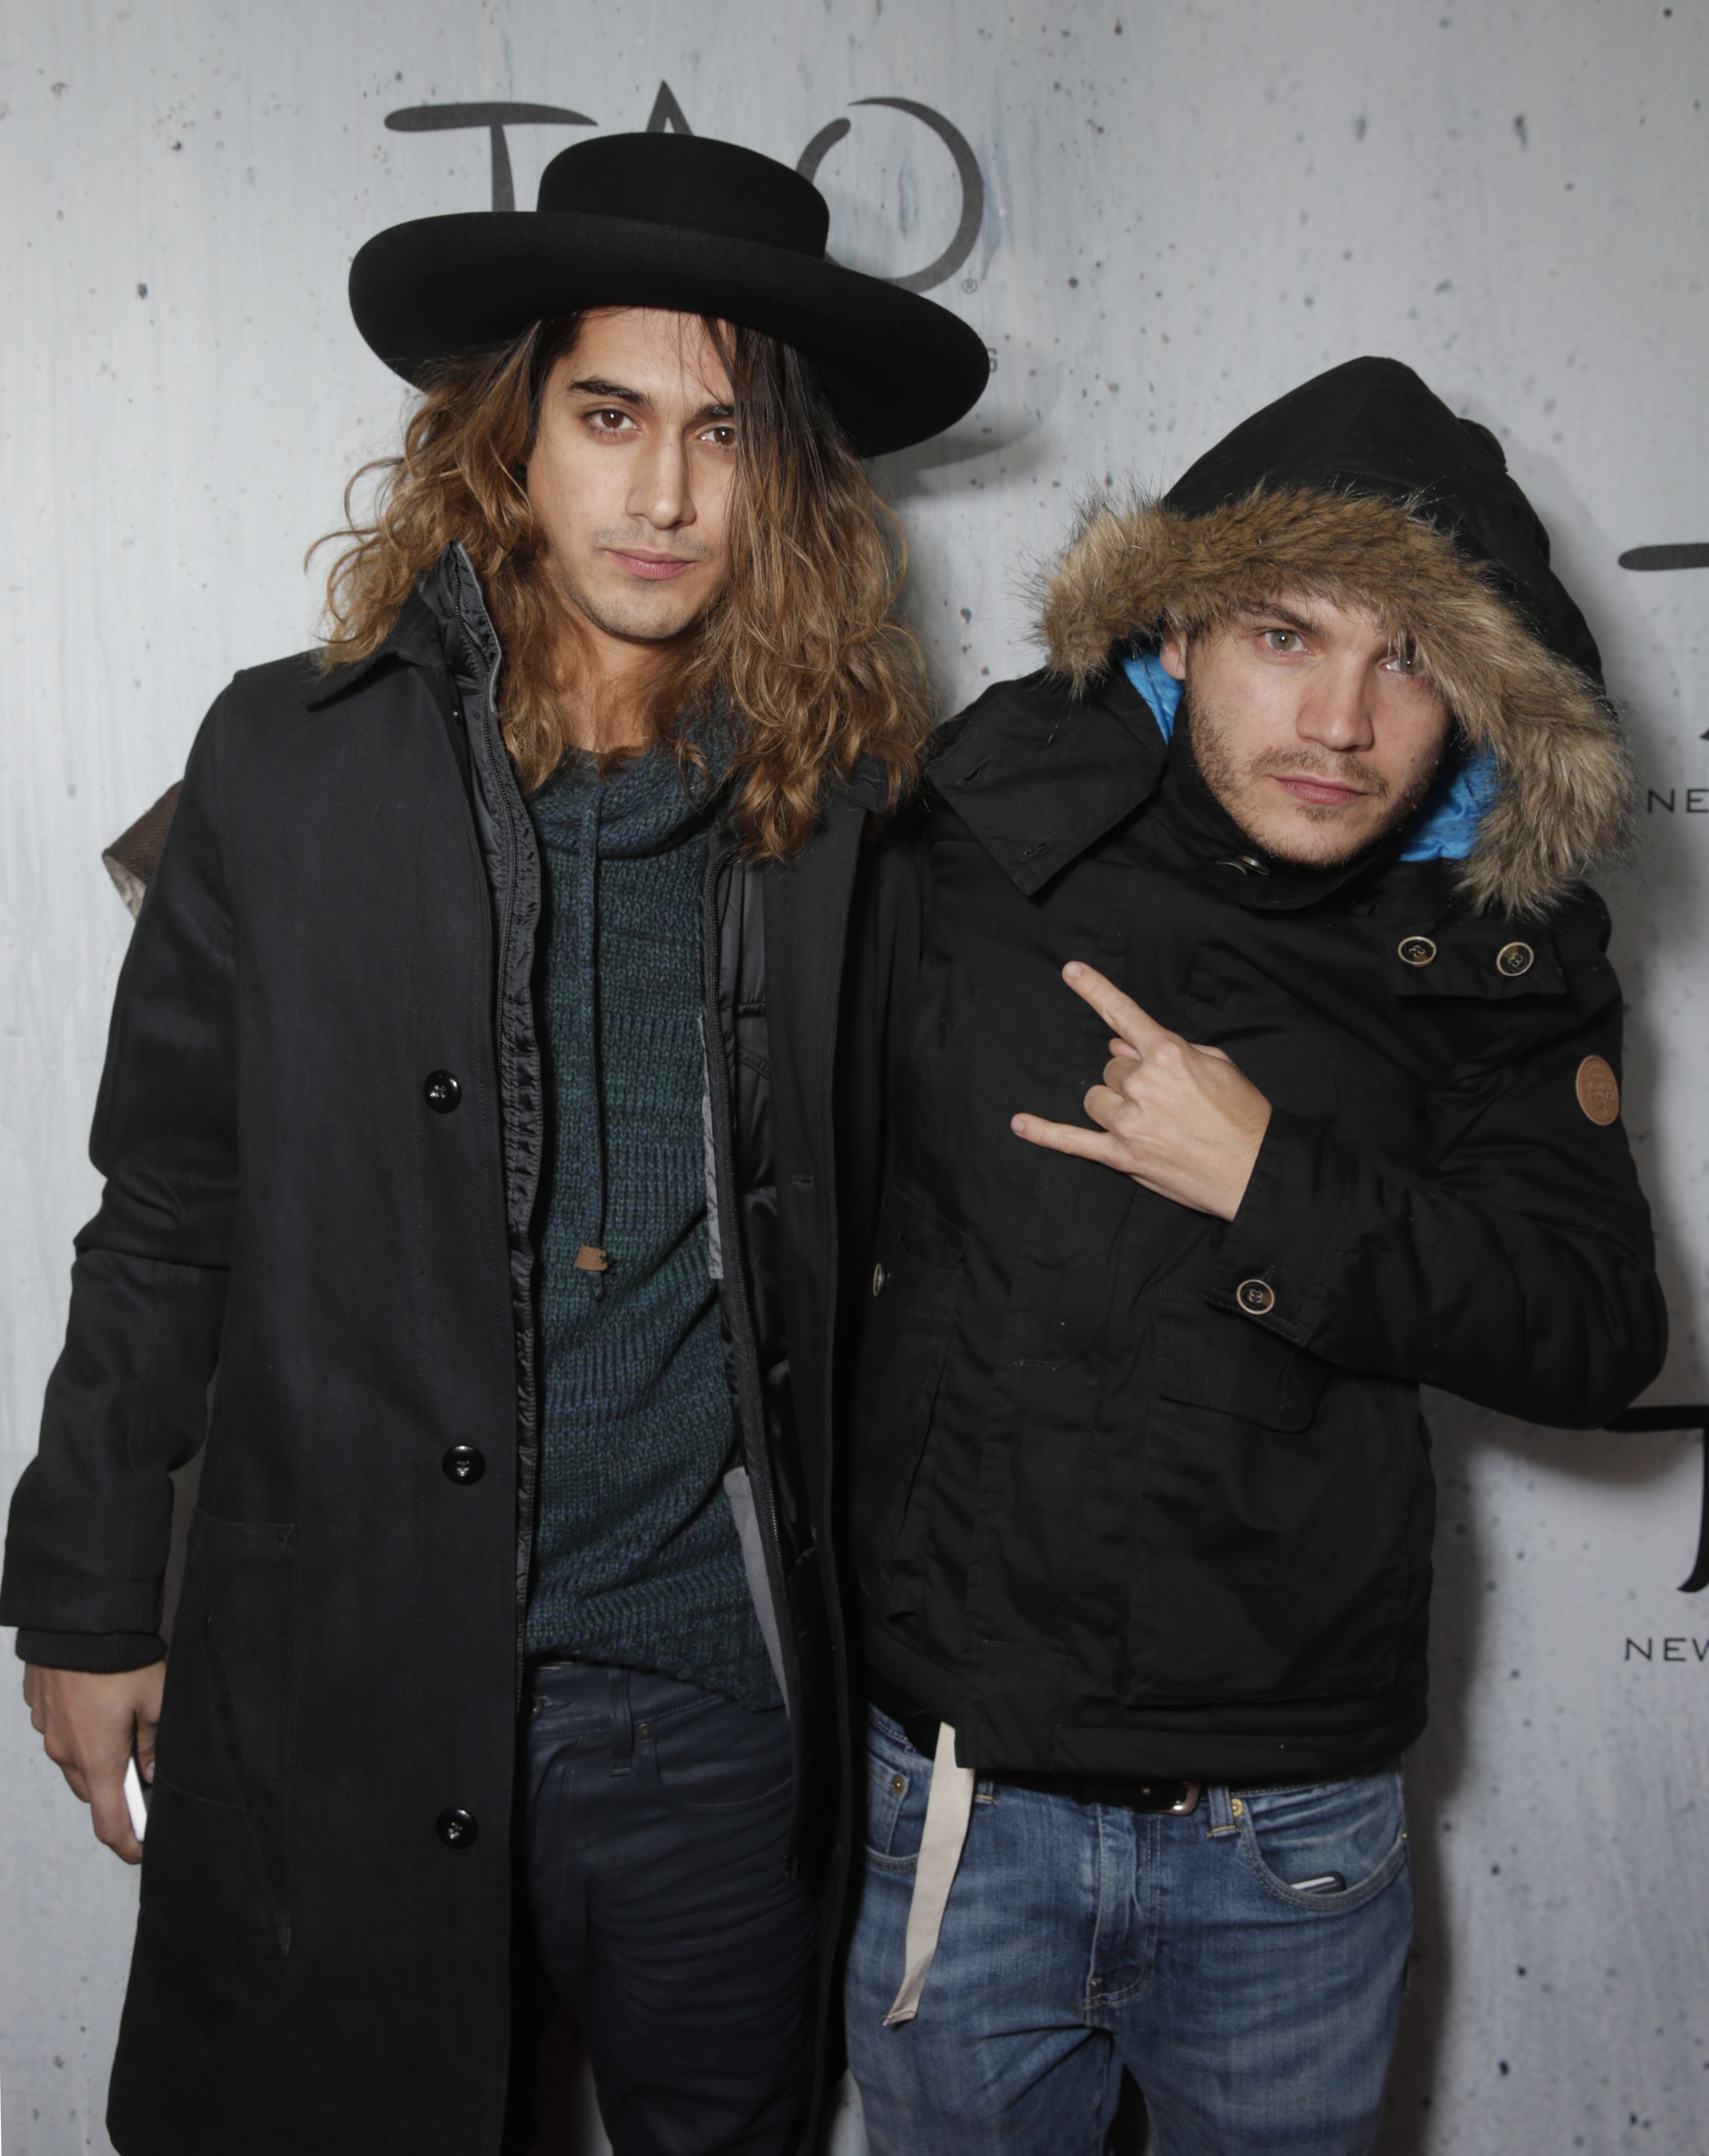 Avan Jogia and Emile Hirsch attend TAO Sundance in Park City